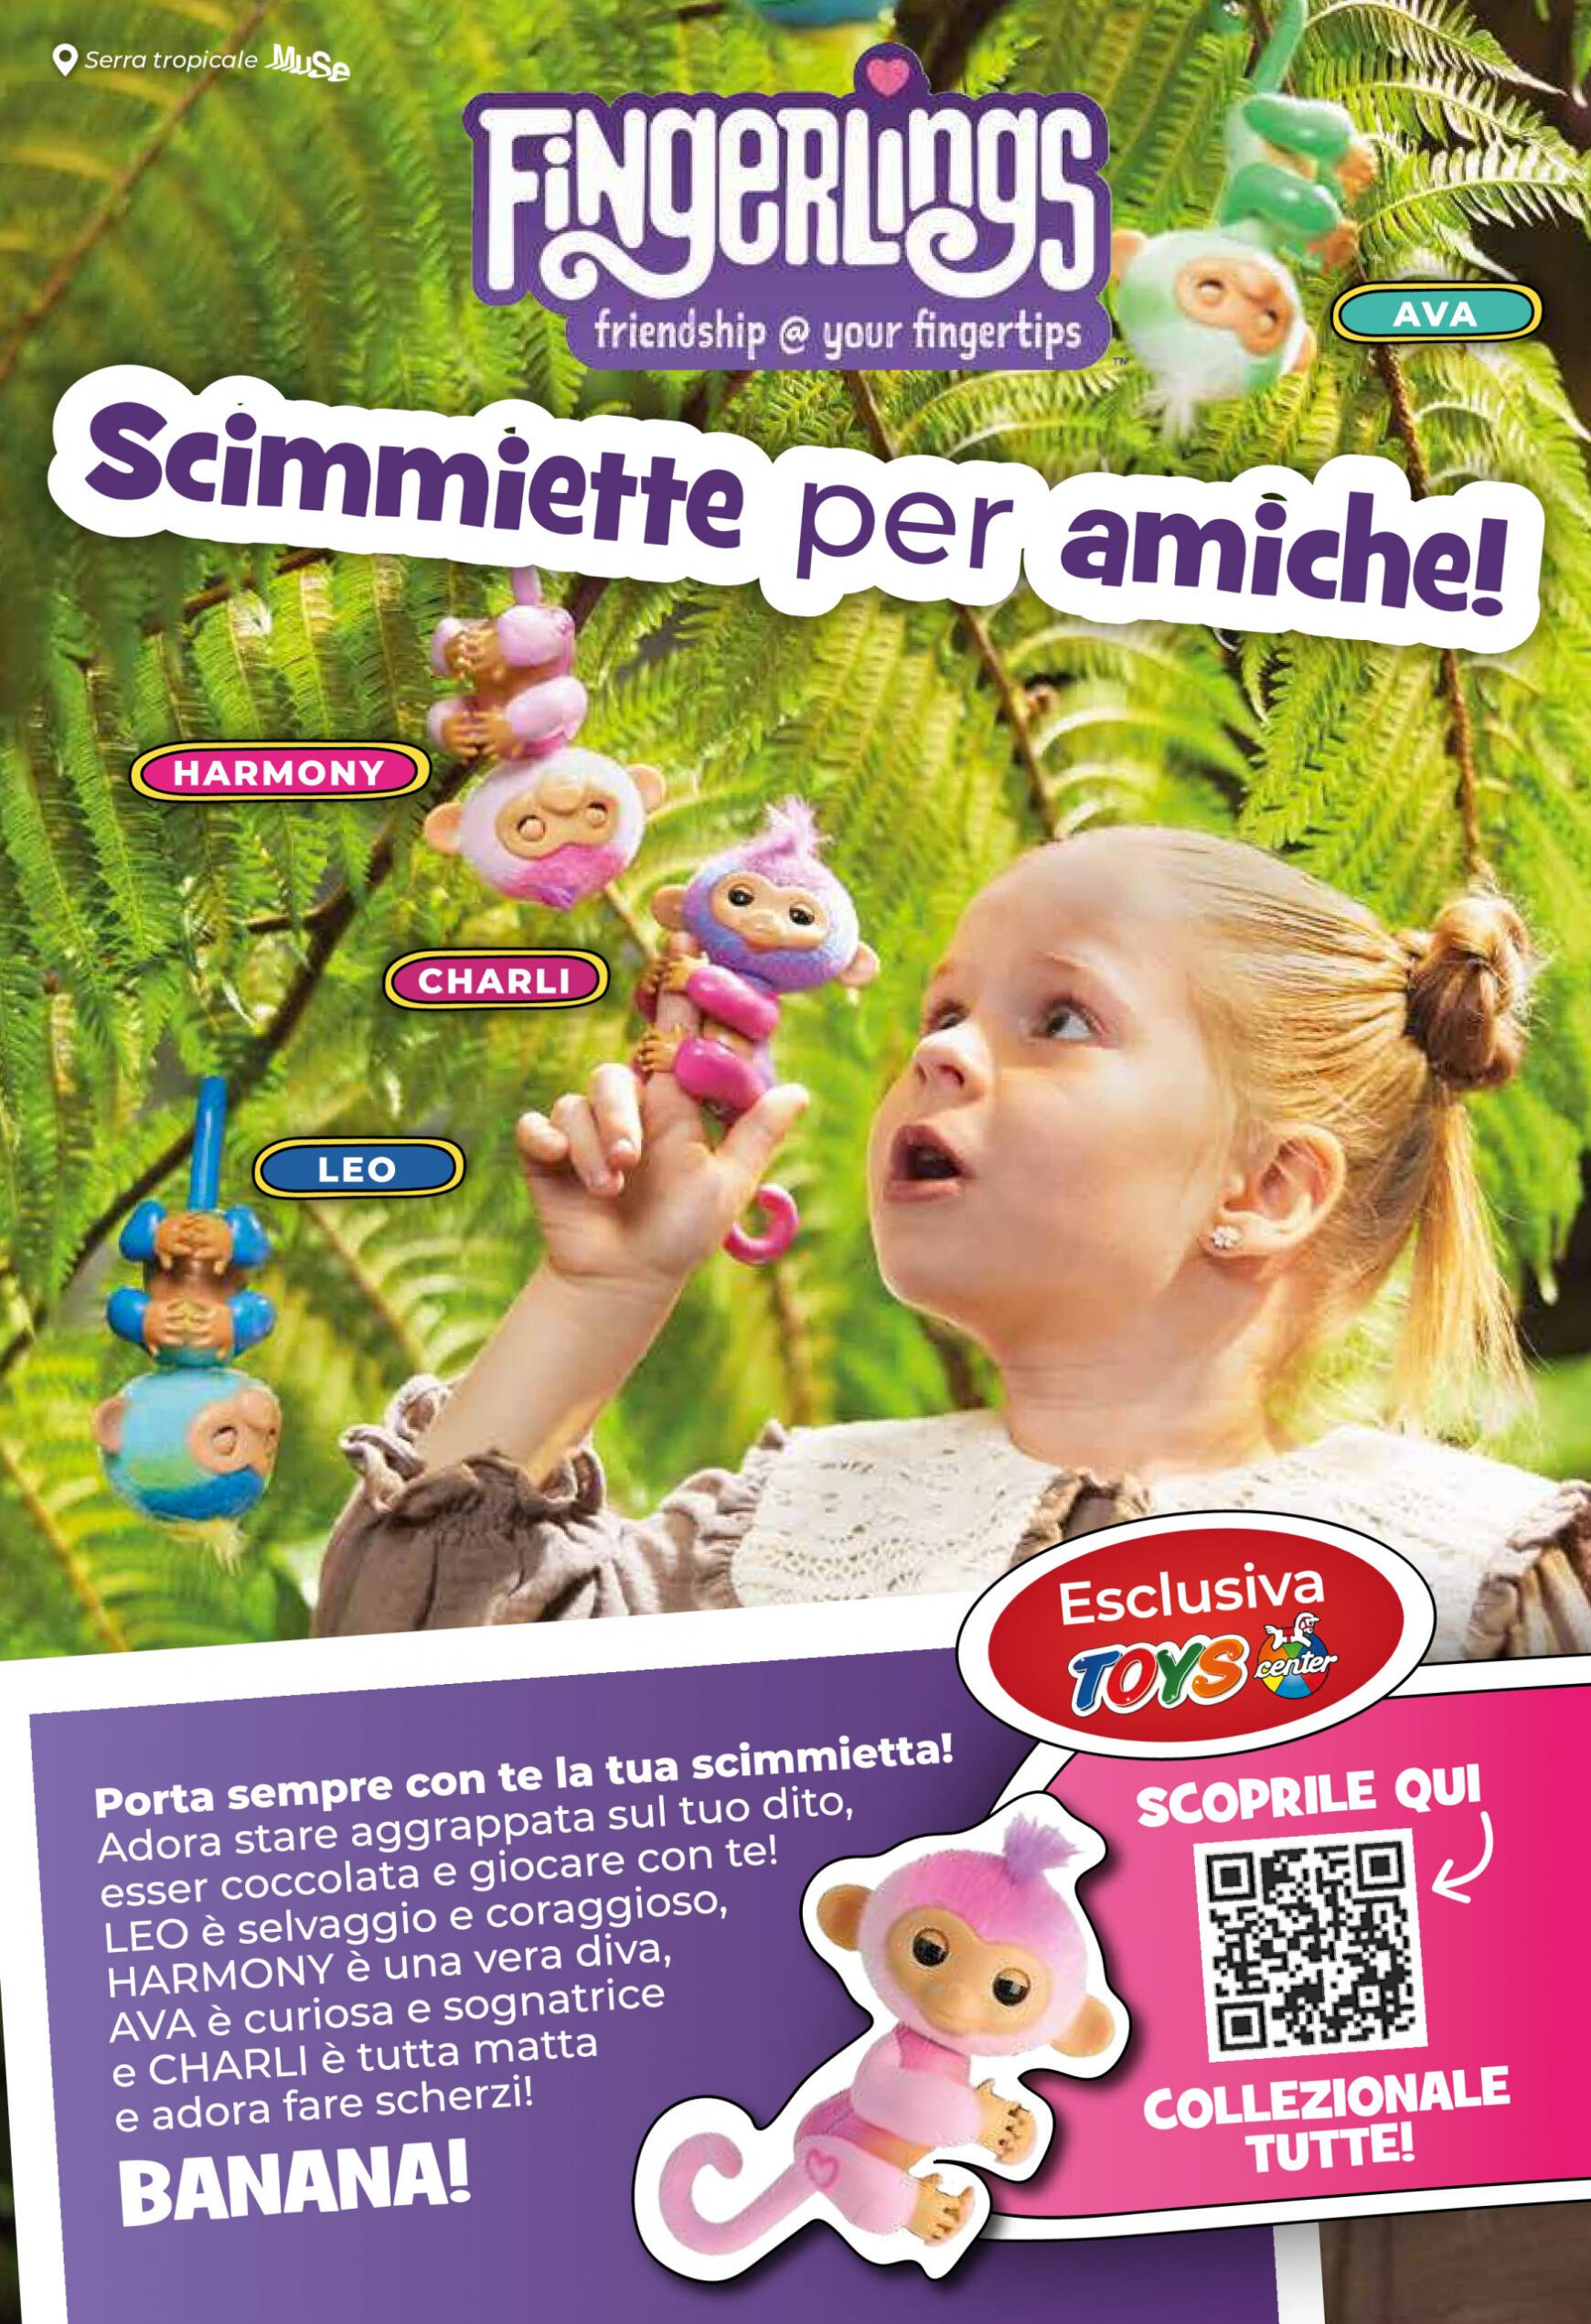 toys-center - Nuovo volantino Toys Center 01.05. - 31.12. - page: 52